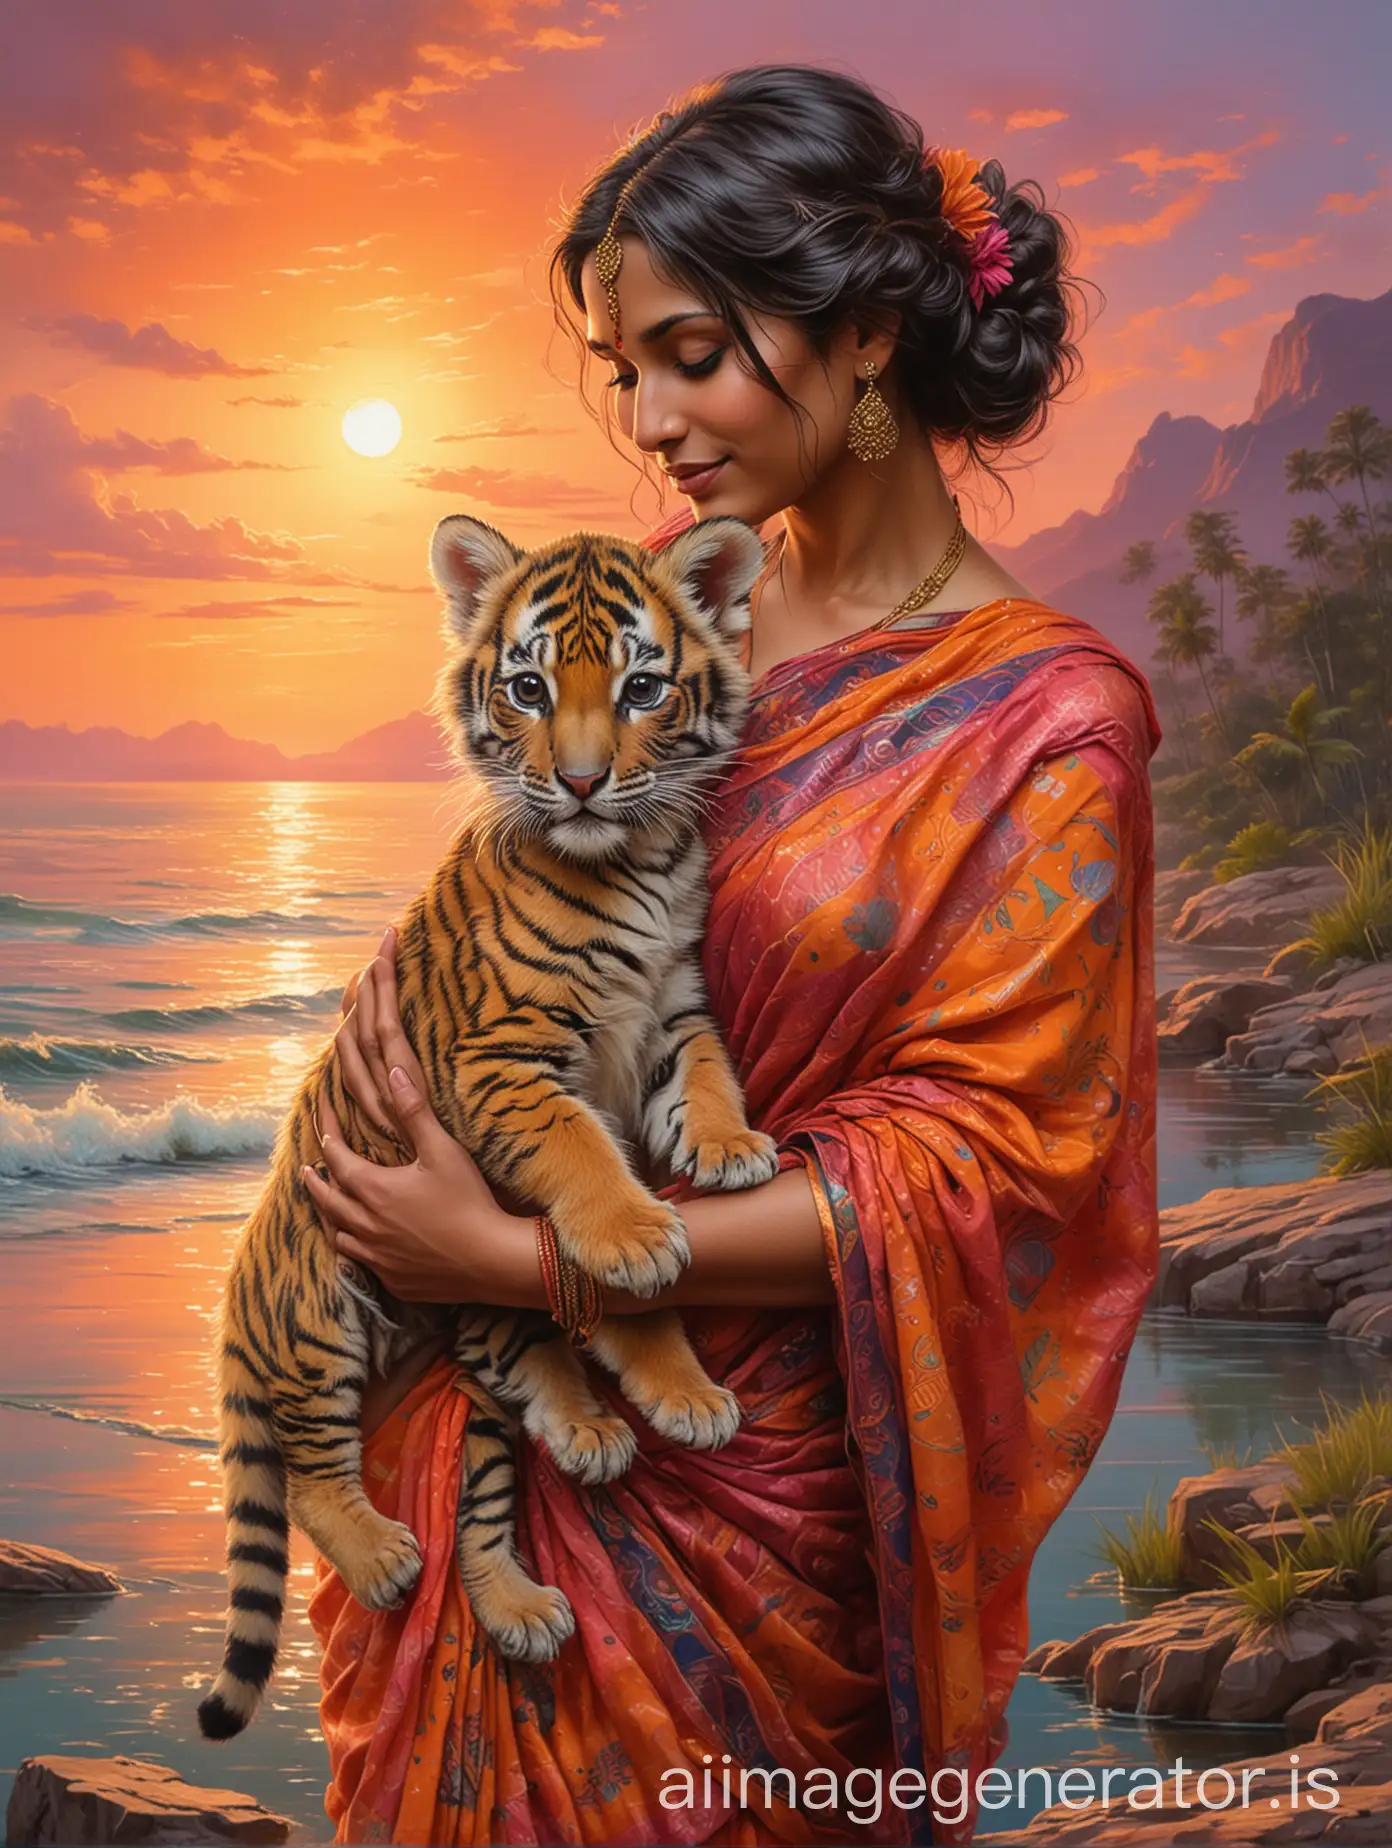 Hindi-Woman-in-Vibrant-Sari-Holding-Tiger-Cub-at-Sunset-Waterscape